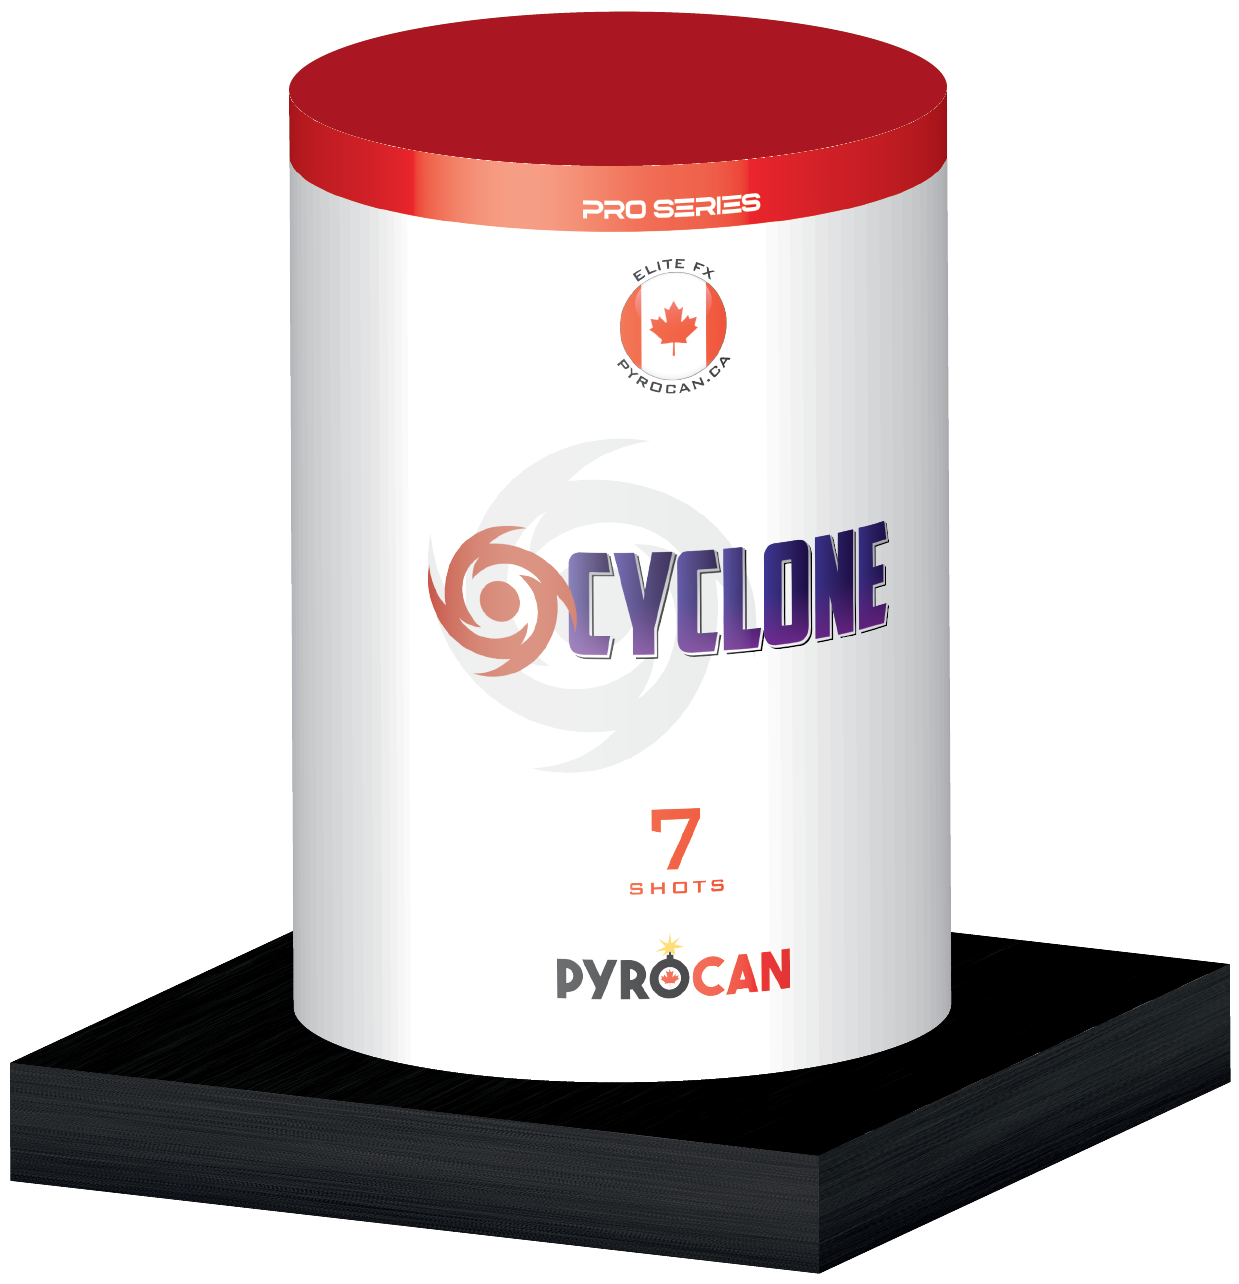 Pro Series Cyclone: Rocket Fireworks Canada